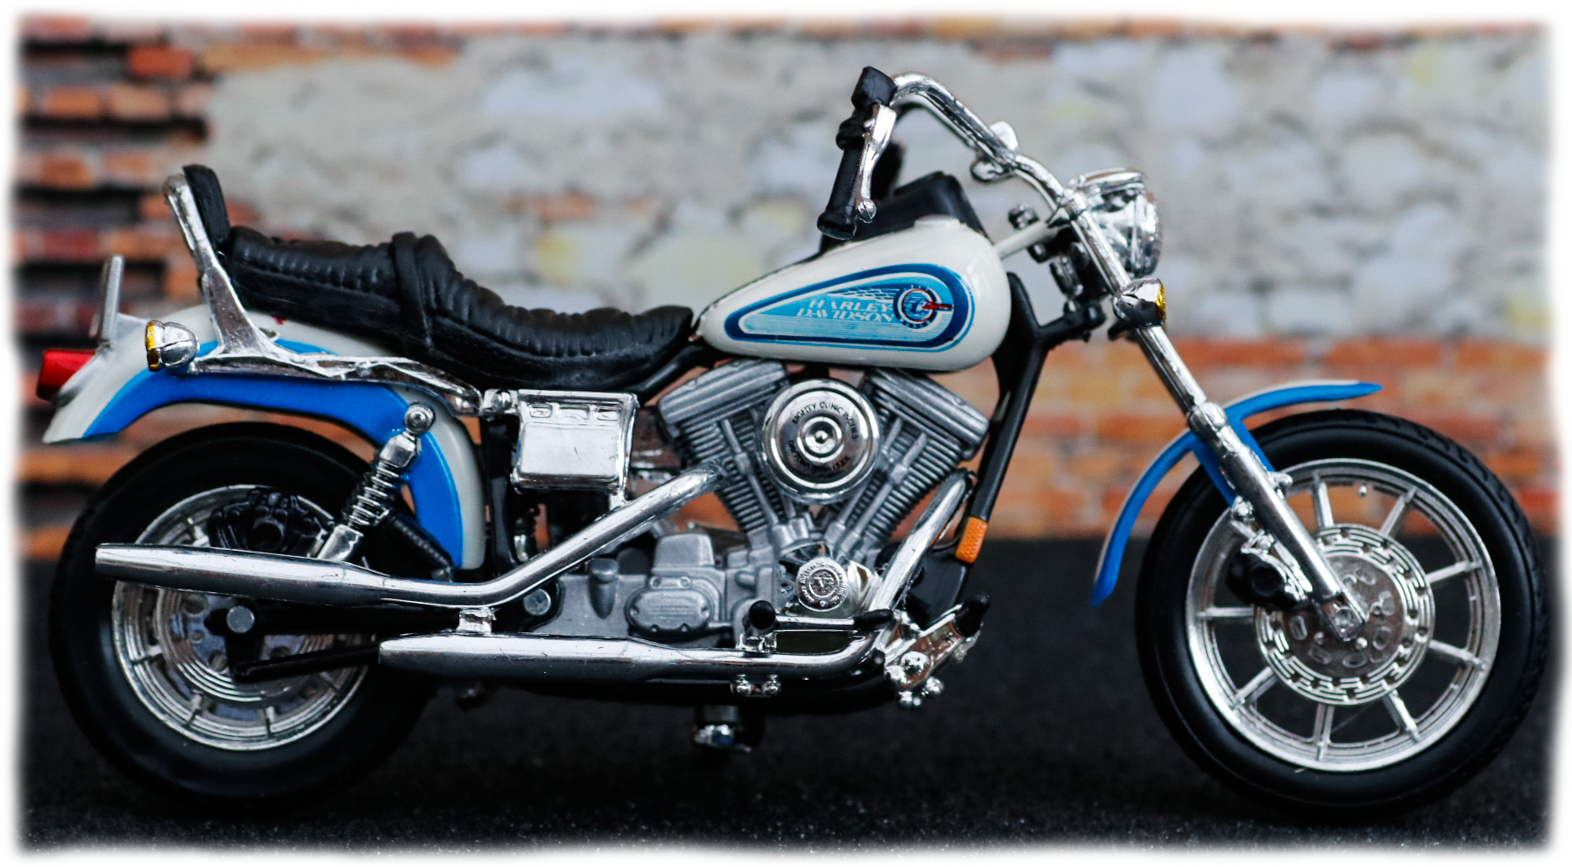 Maisto Harley Davidson FX range of 1:18 scale motorcycles